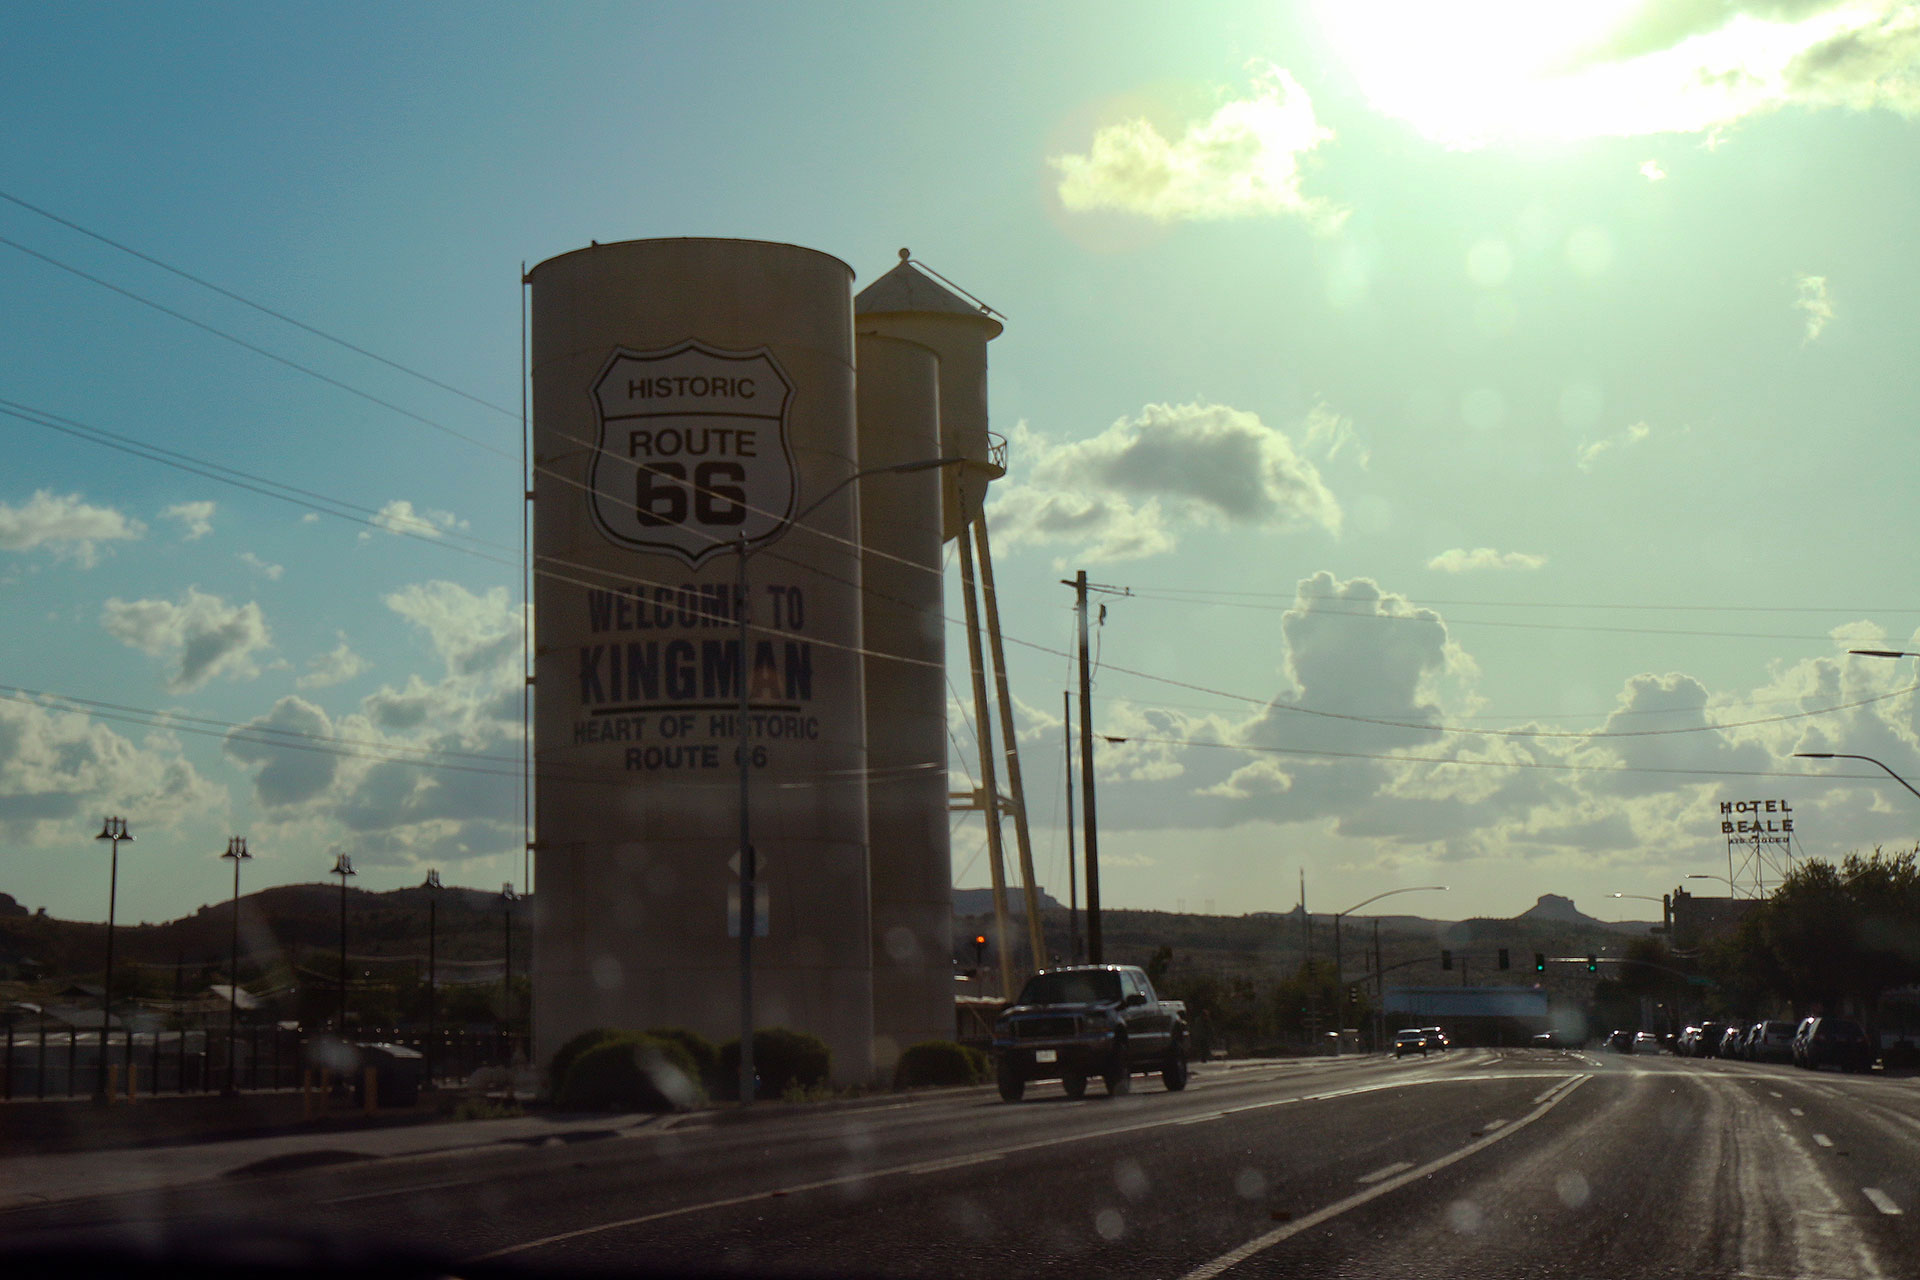 Driving along Historic Route 66 towards Nevada & Las Vegas